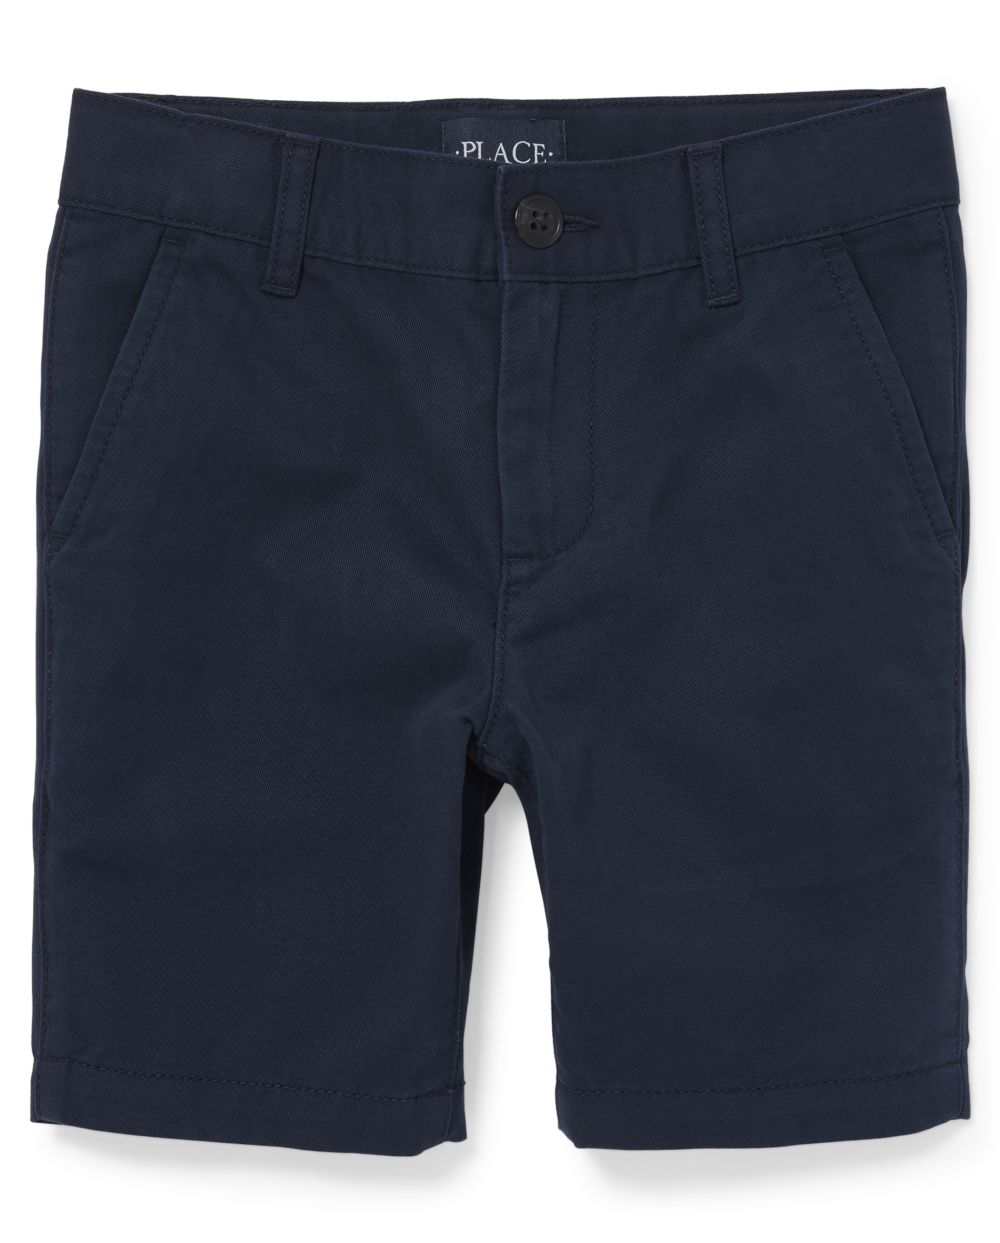 Boys Woven Chino Shorts